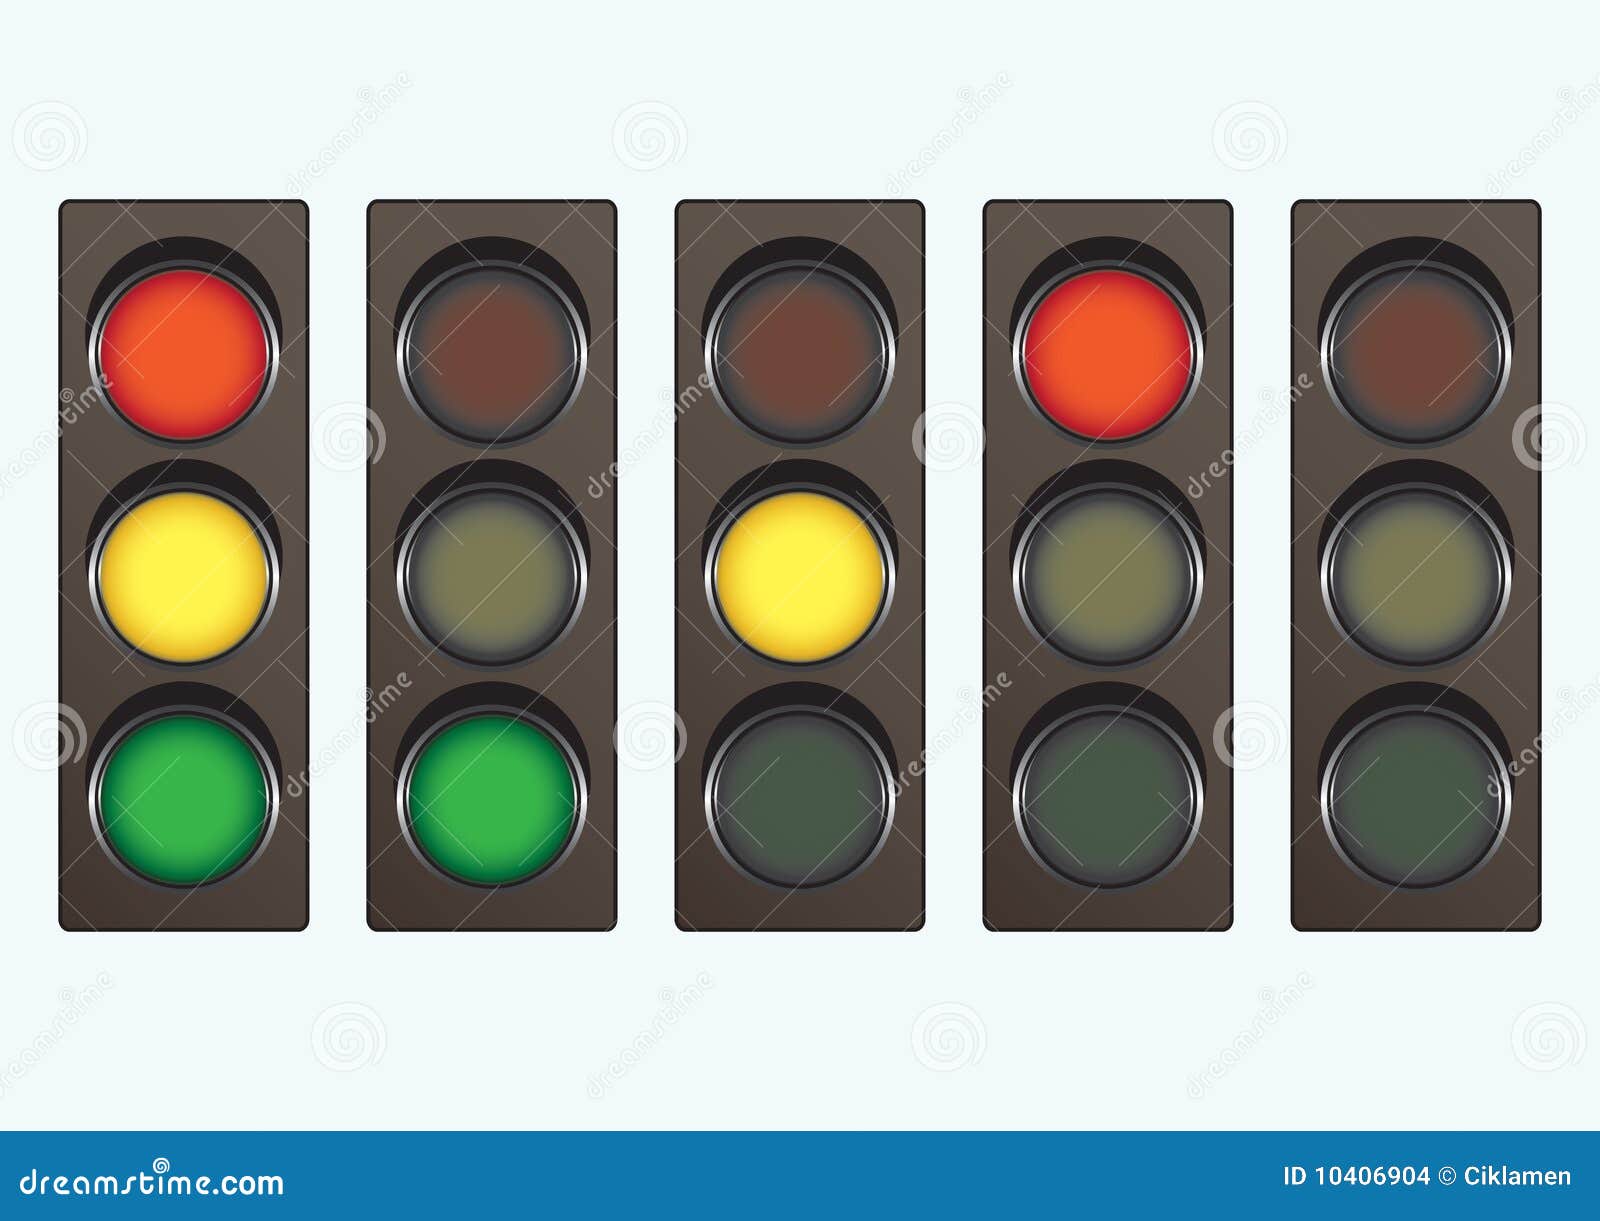 different traffic light signals